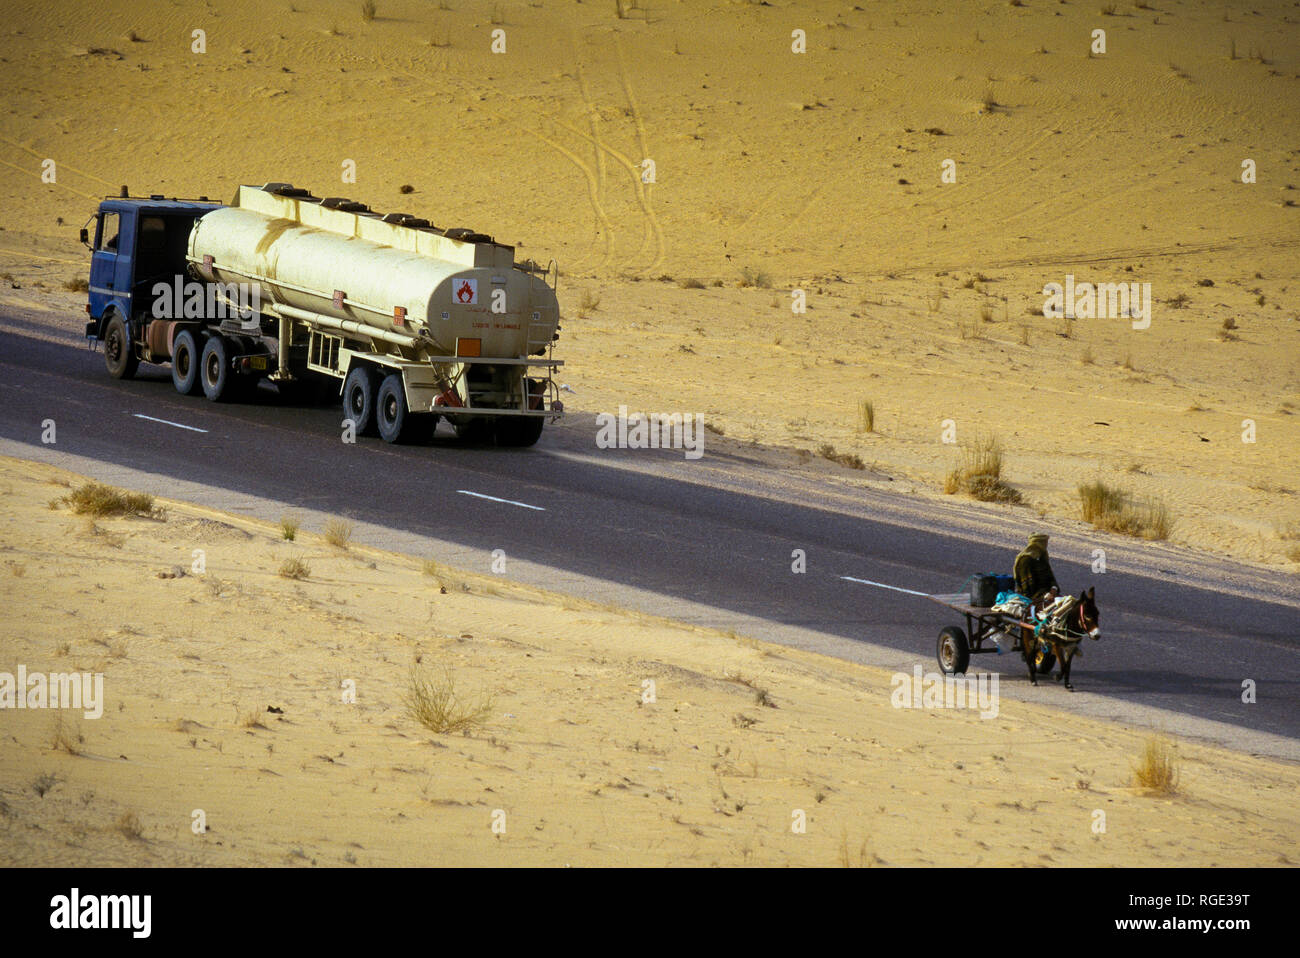 BORDJ EL HAOUAS, ALGERIEN - Januar 16, 2002: Off-road Fahrzeuge und Transportmittel entlang der langen Geraden in der Wüste Sahara, Algerien, Nord Afr Stockfoto